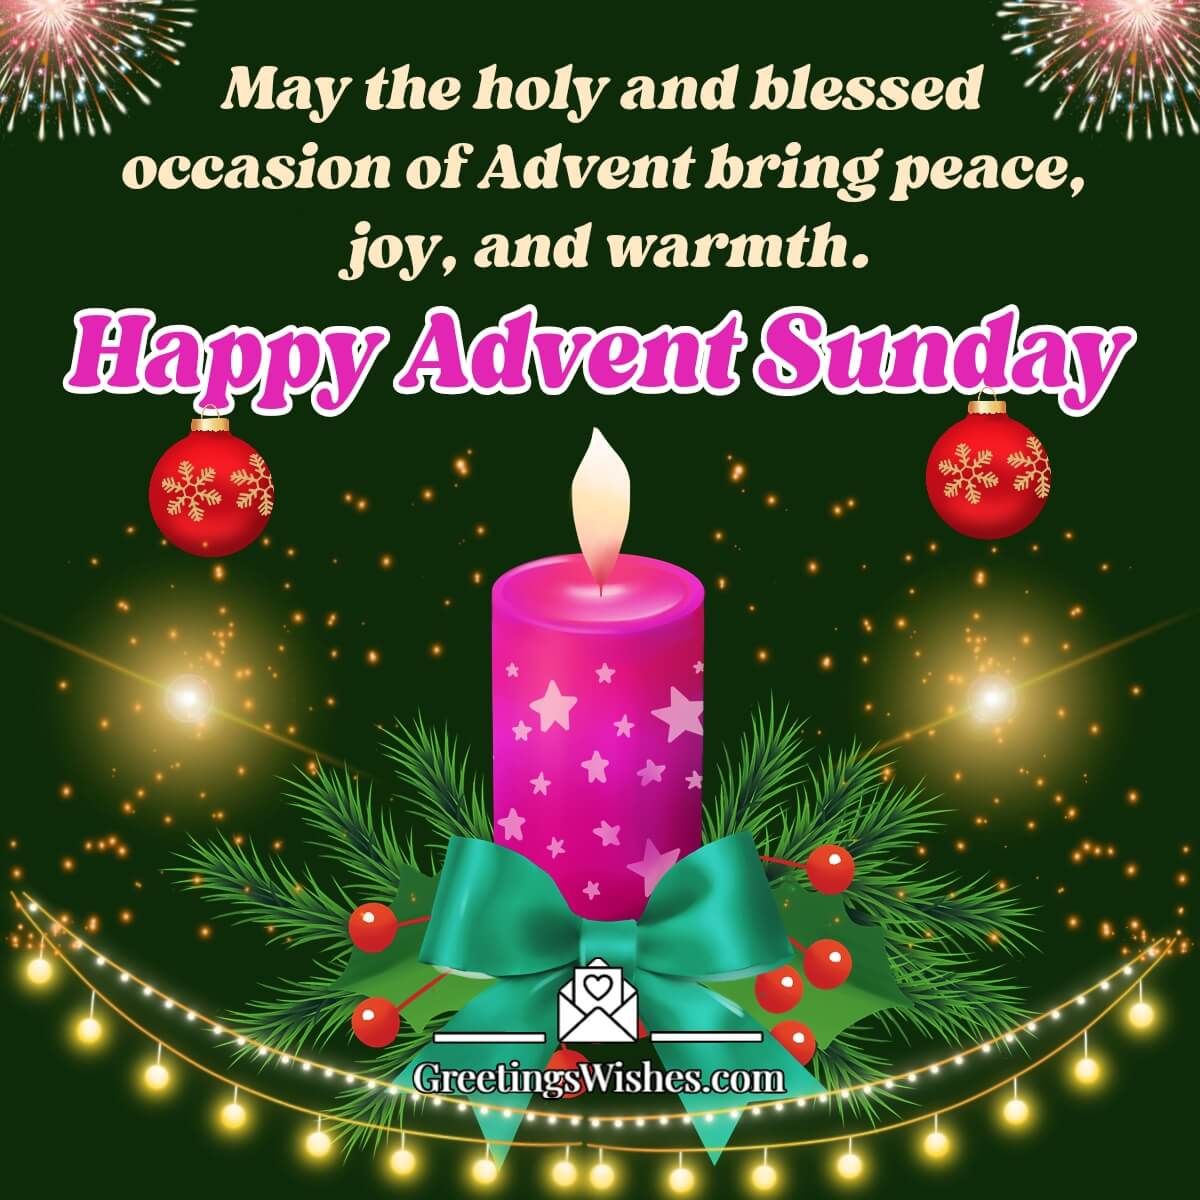 Happy Advent Sunday Wishes